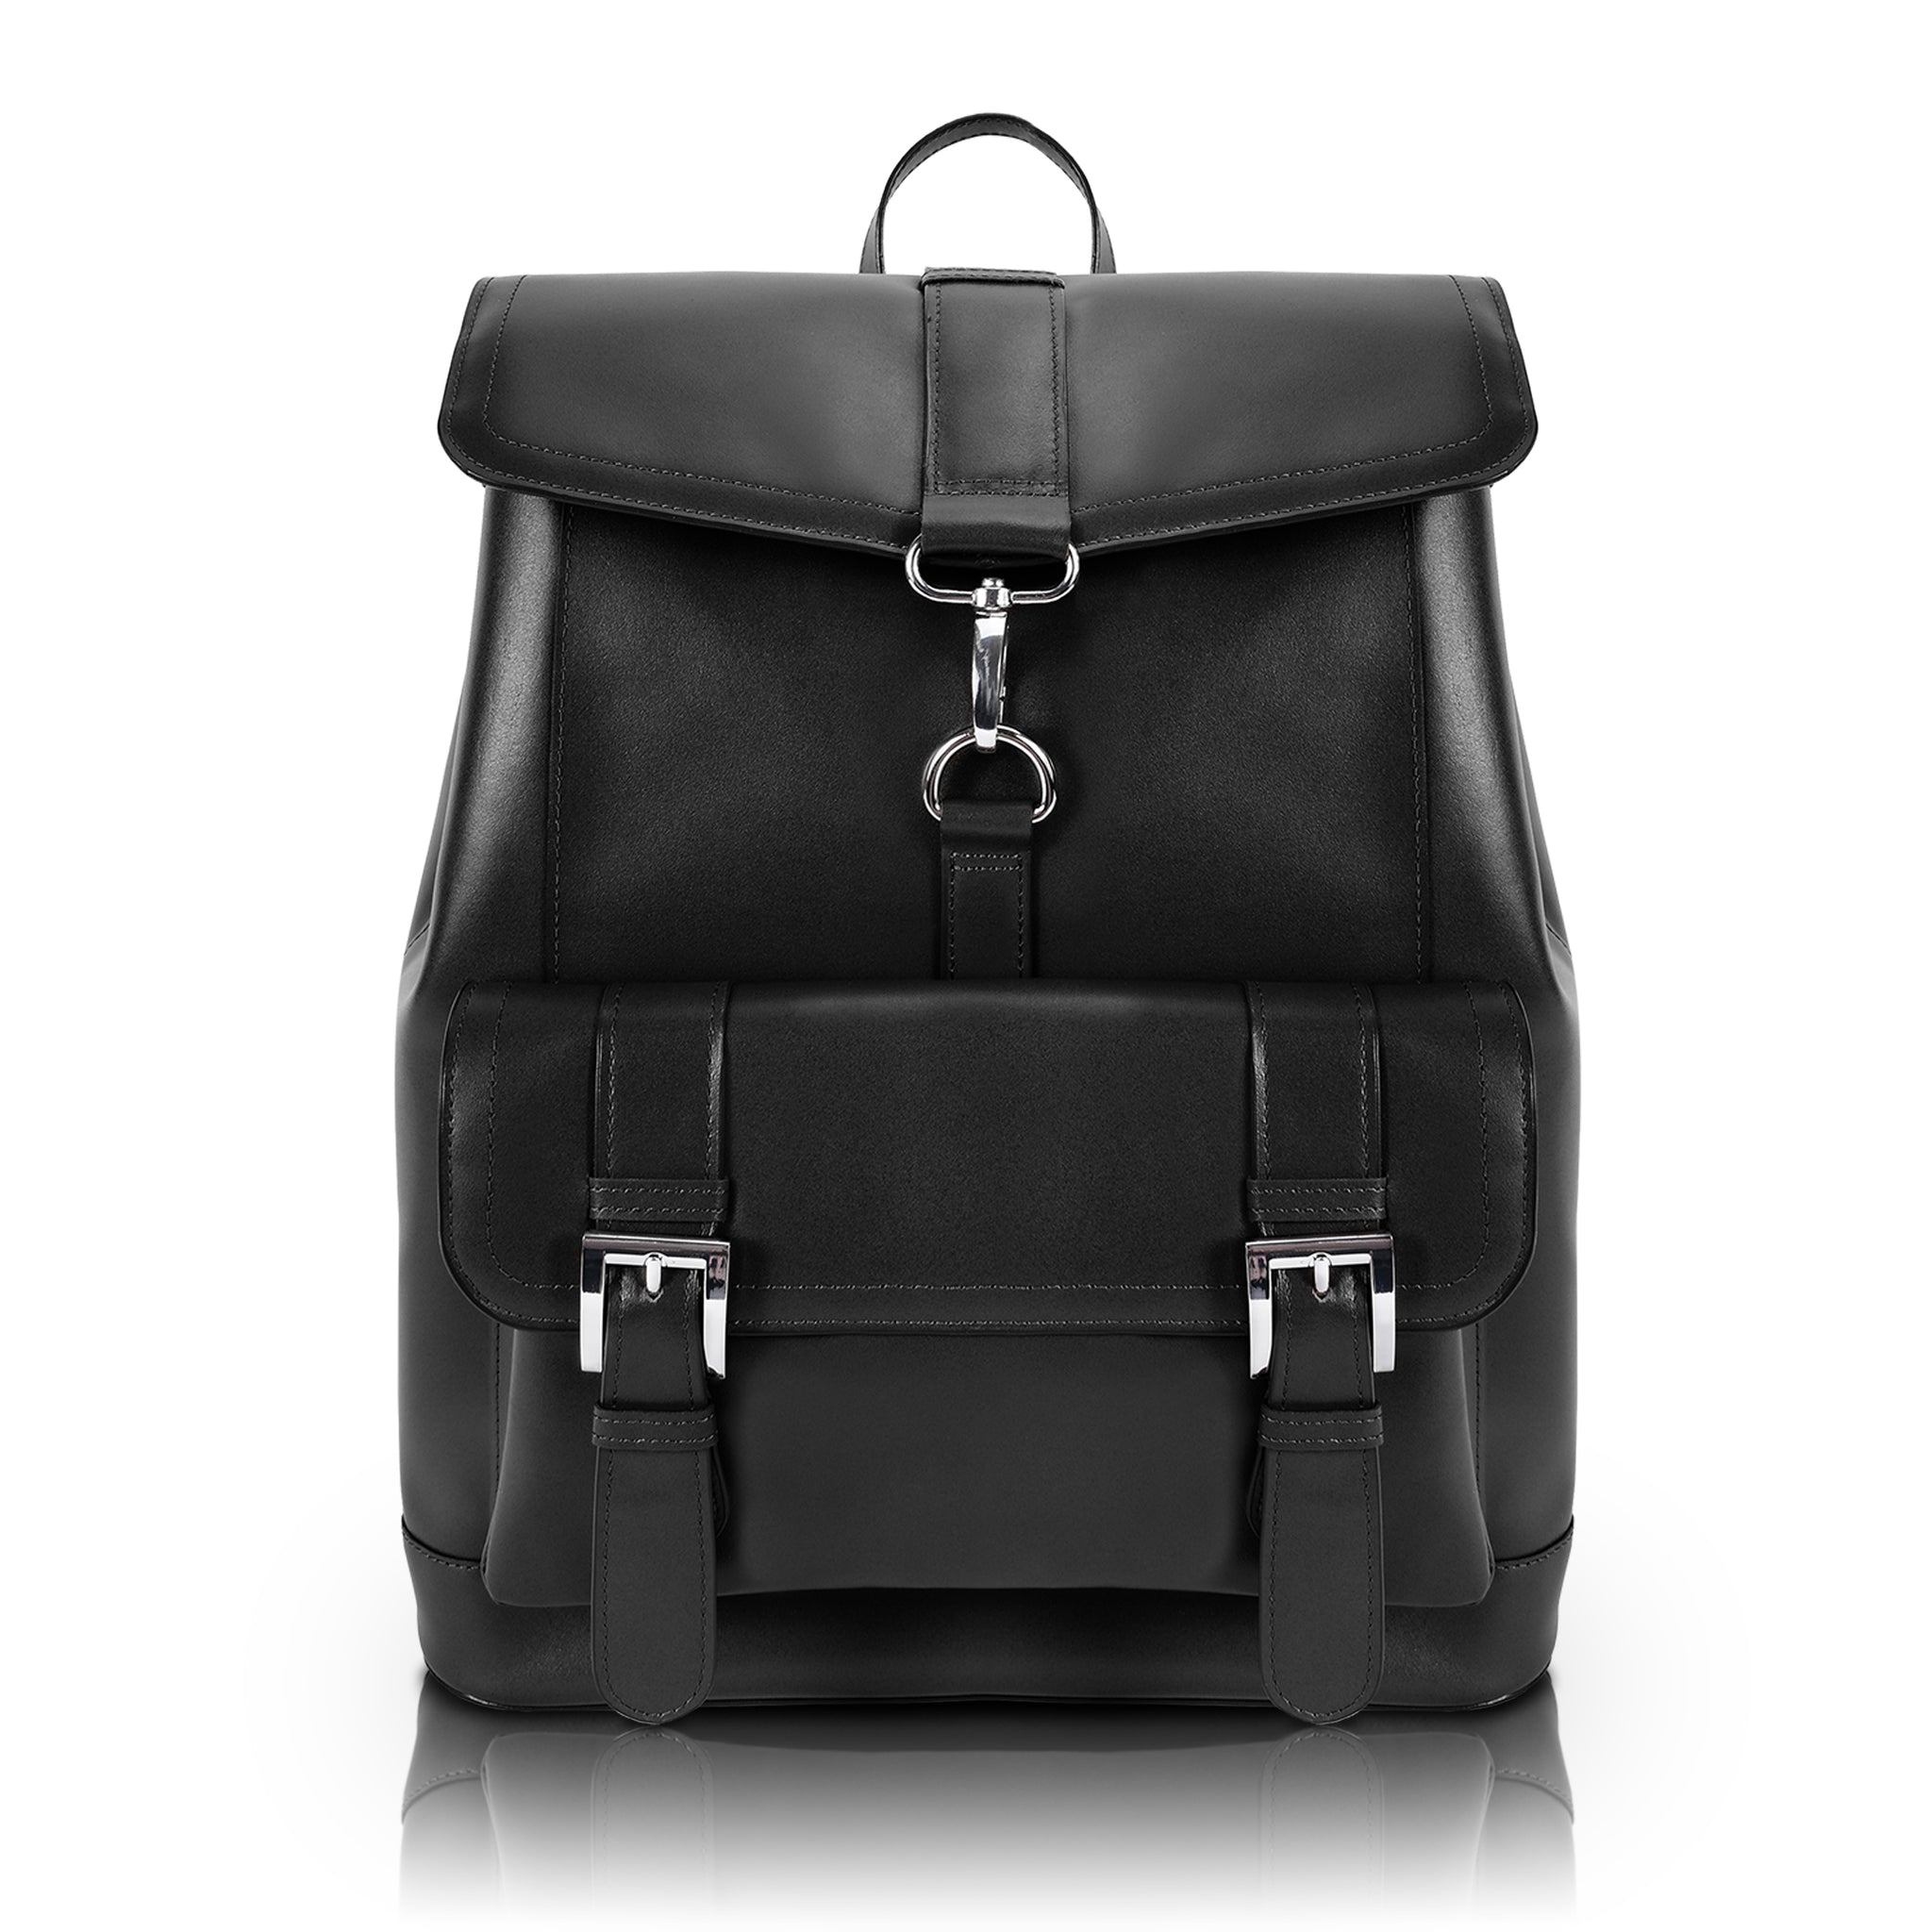 McKlein HAGEN 15" Leather Laptop Backpack